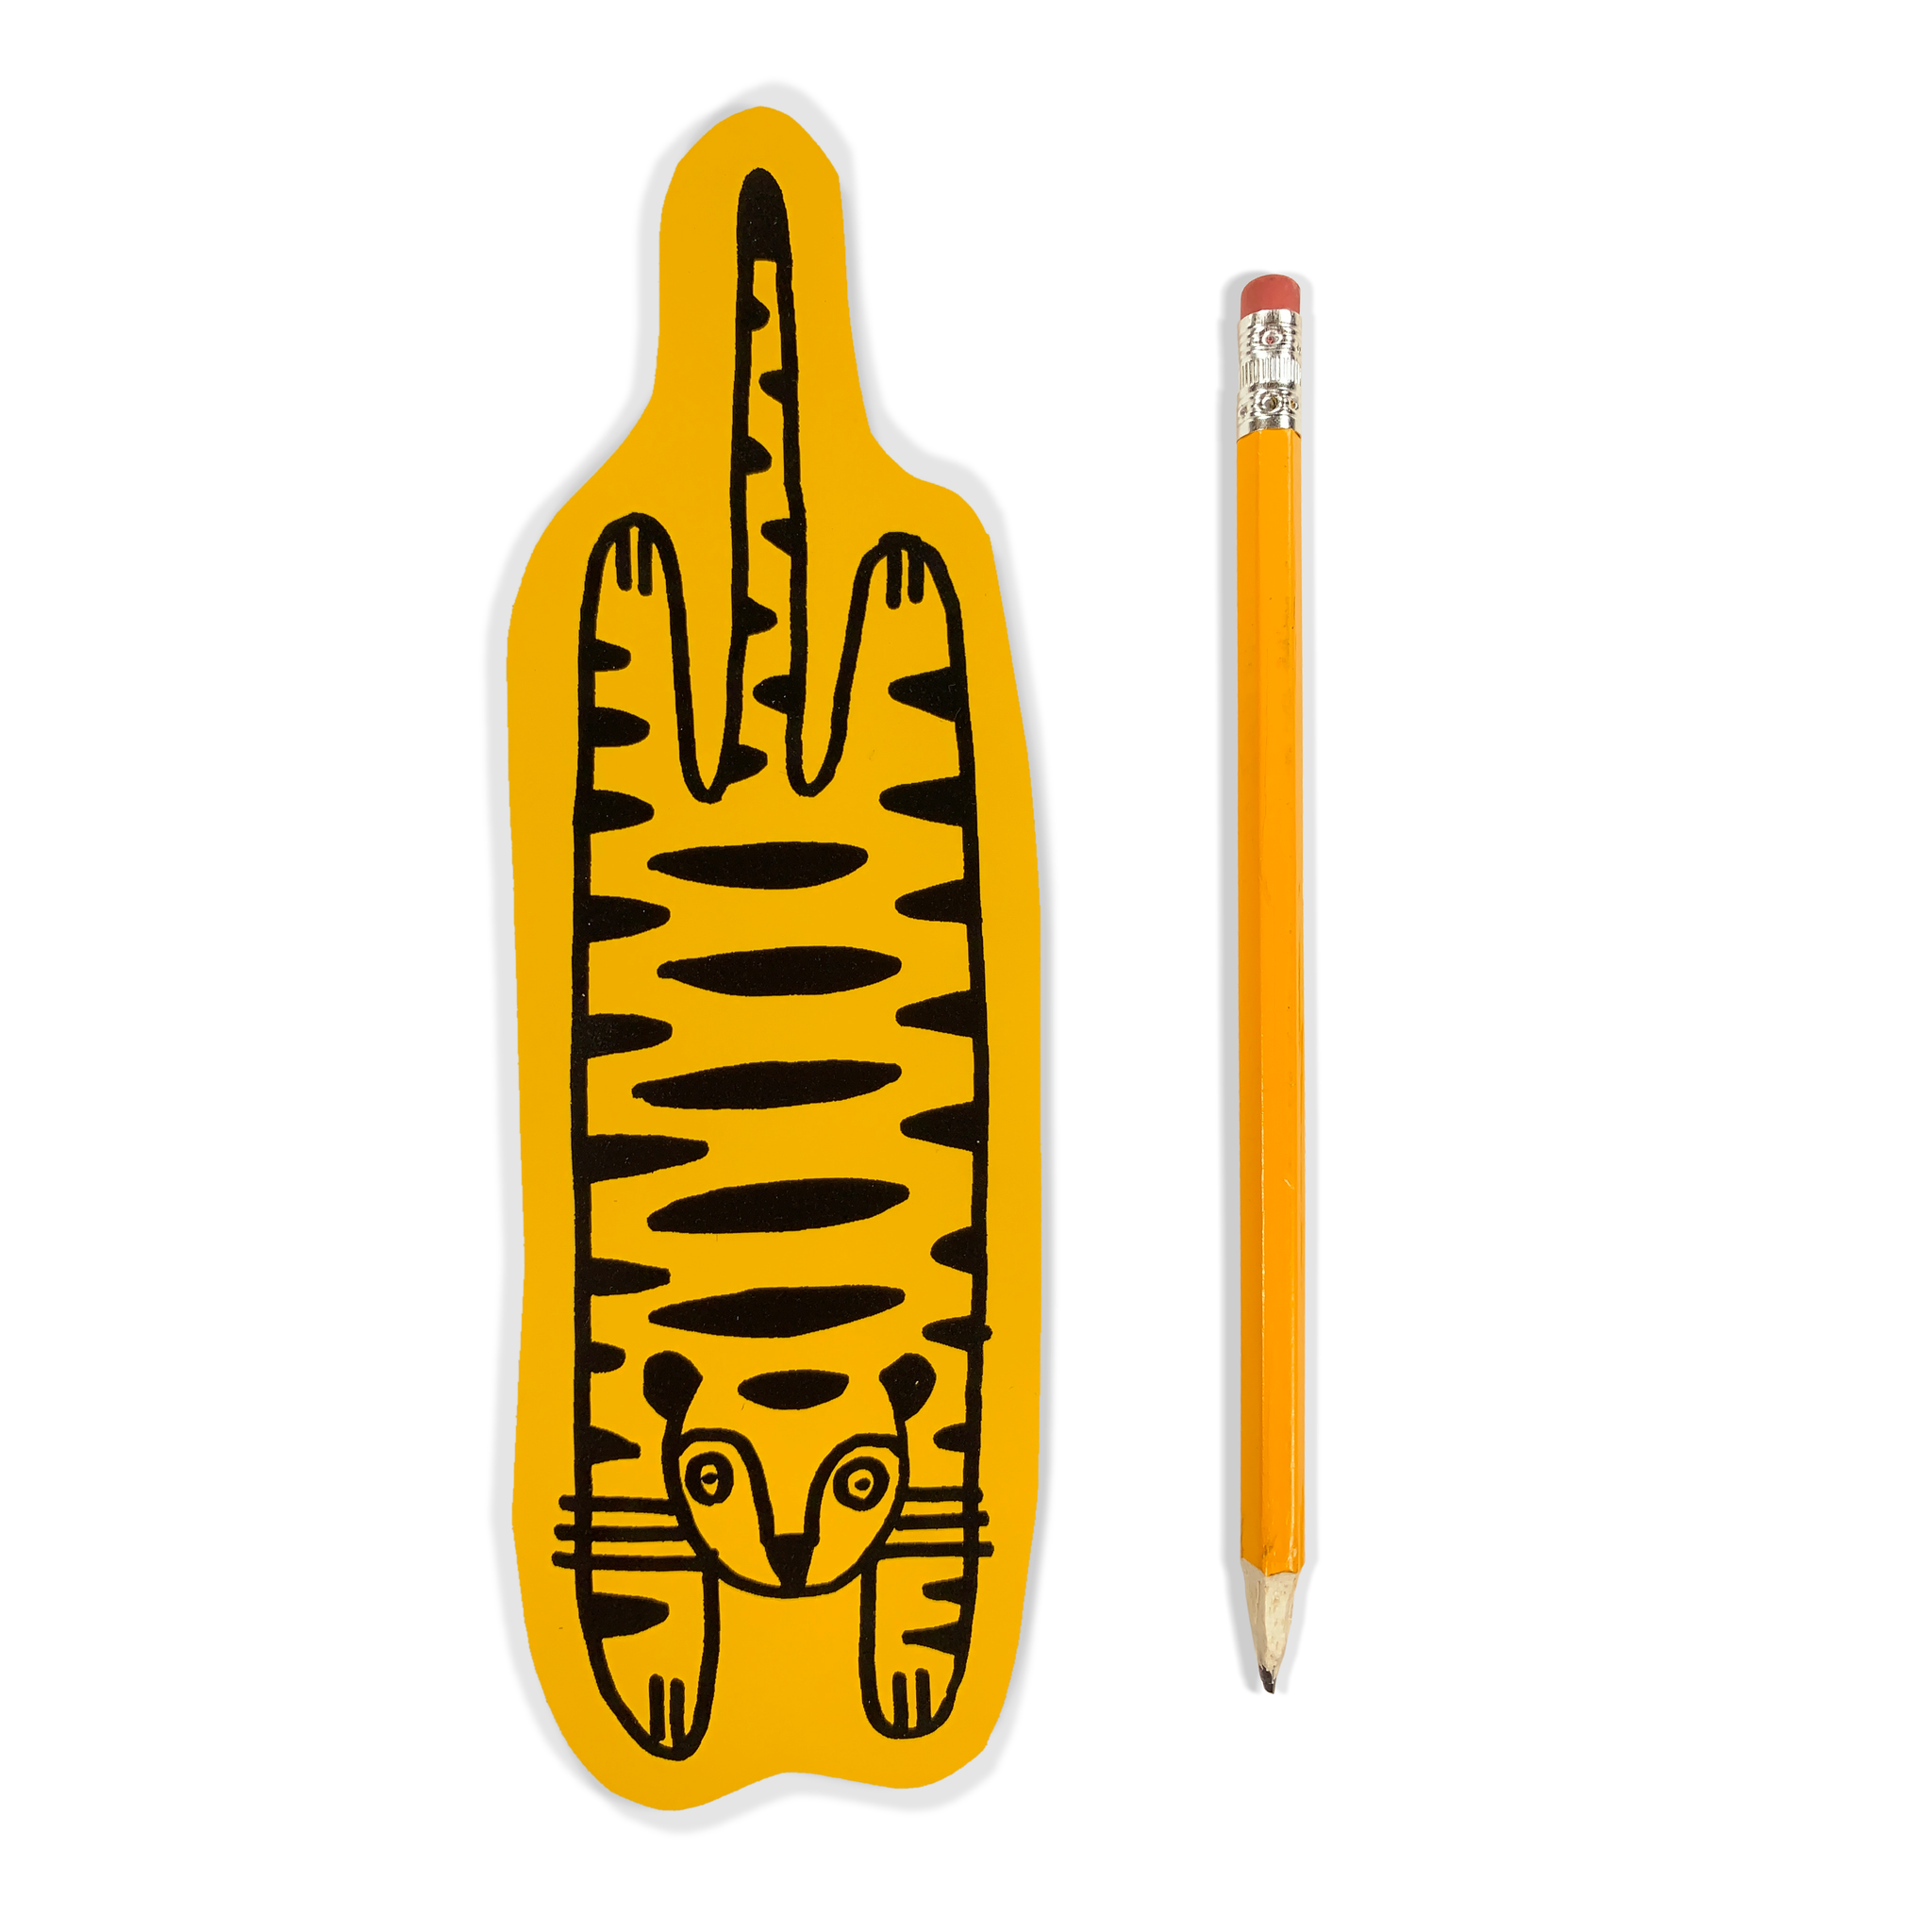 Big Tiger Sticker (one)